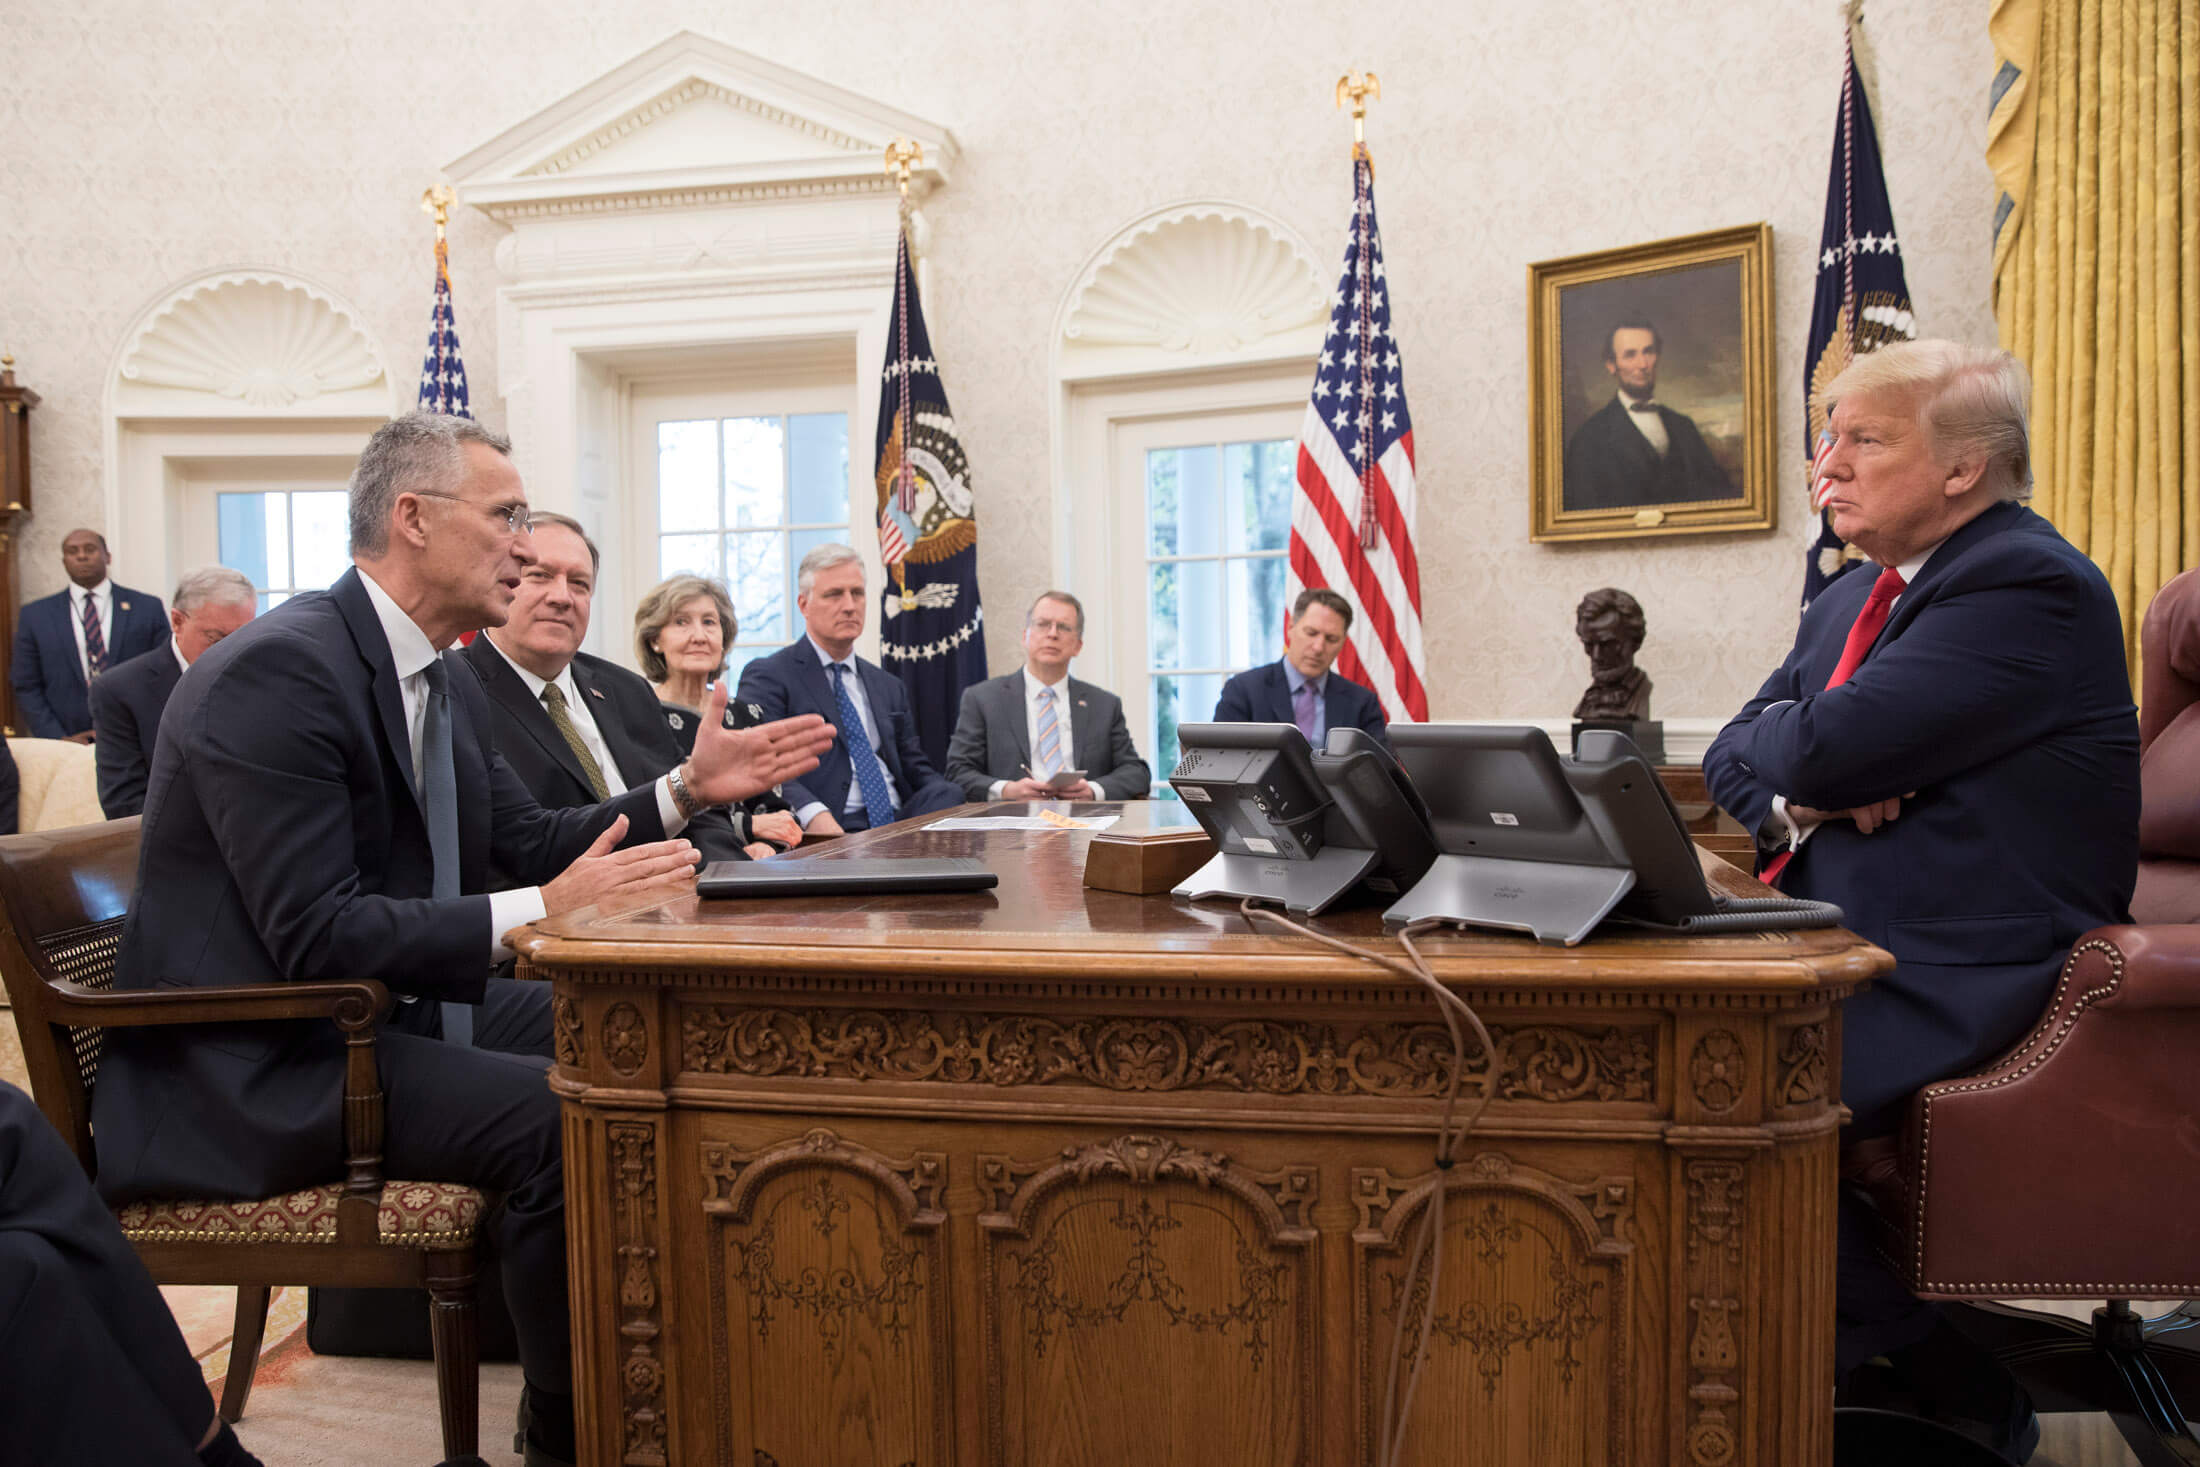 NATO Secretary General Jens Stoltenberg visits U.S. President Donald Trump in the White House, 2019. © NATO / Flickr